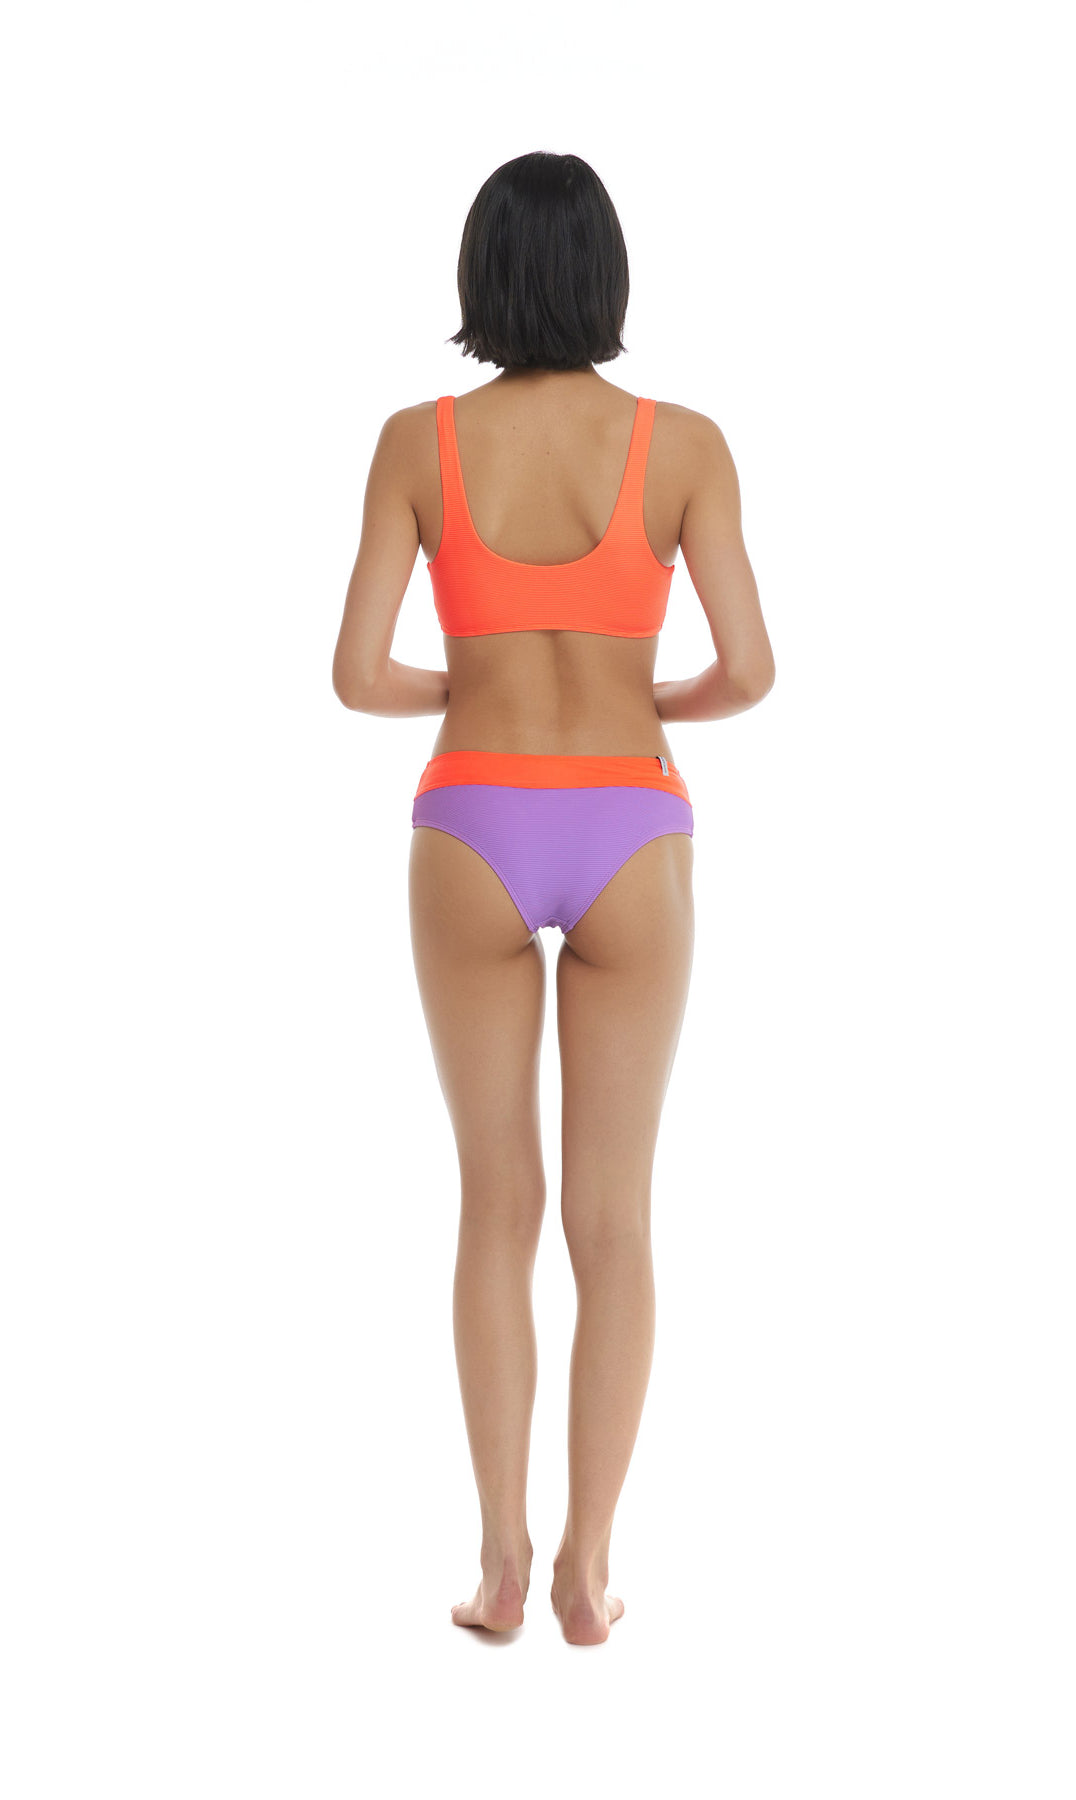 Body Glove: Spectrum Kate Scoop Bikinii Top - SPARK611